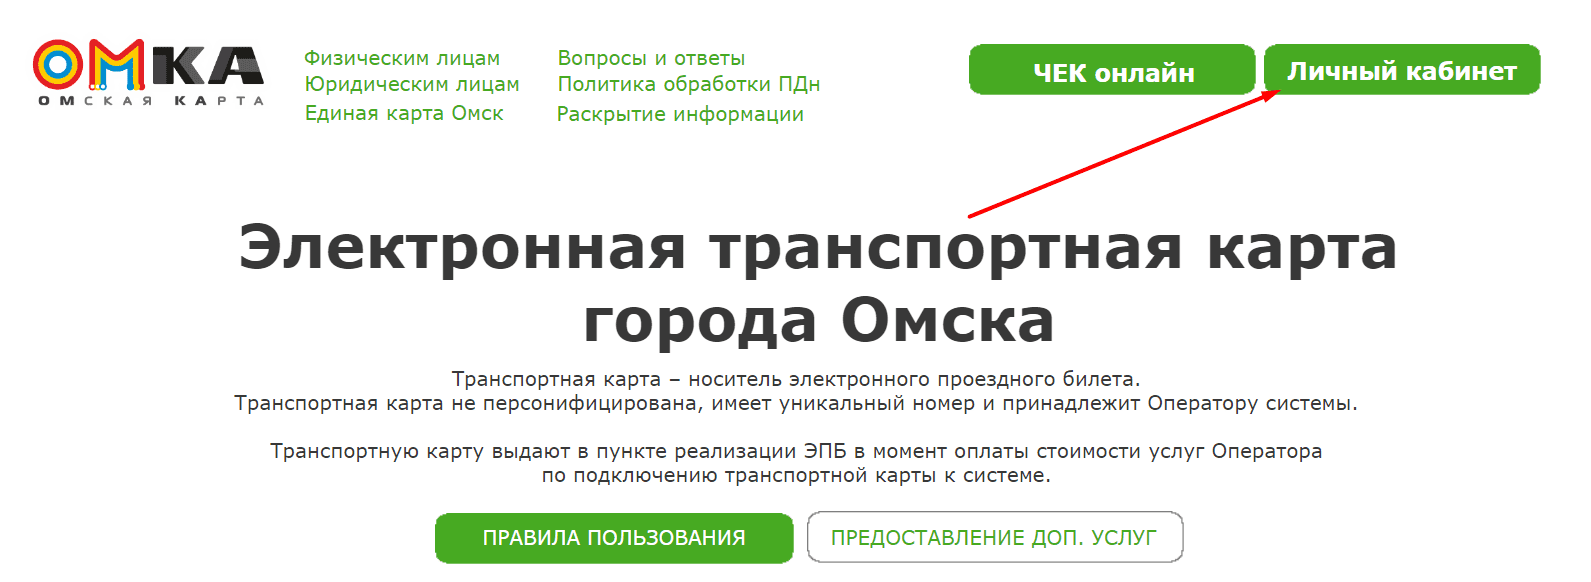 Омск транспортная карта (etk55.ru) - сайт